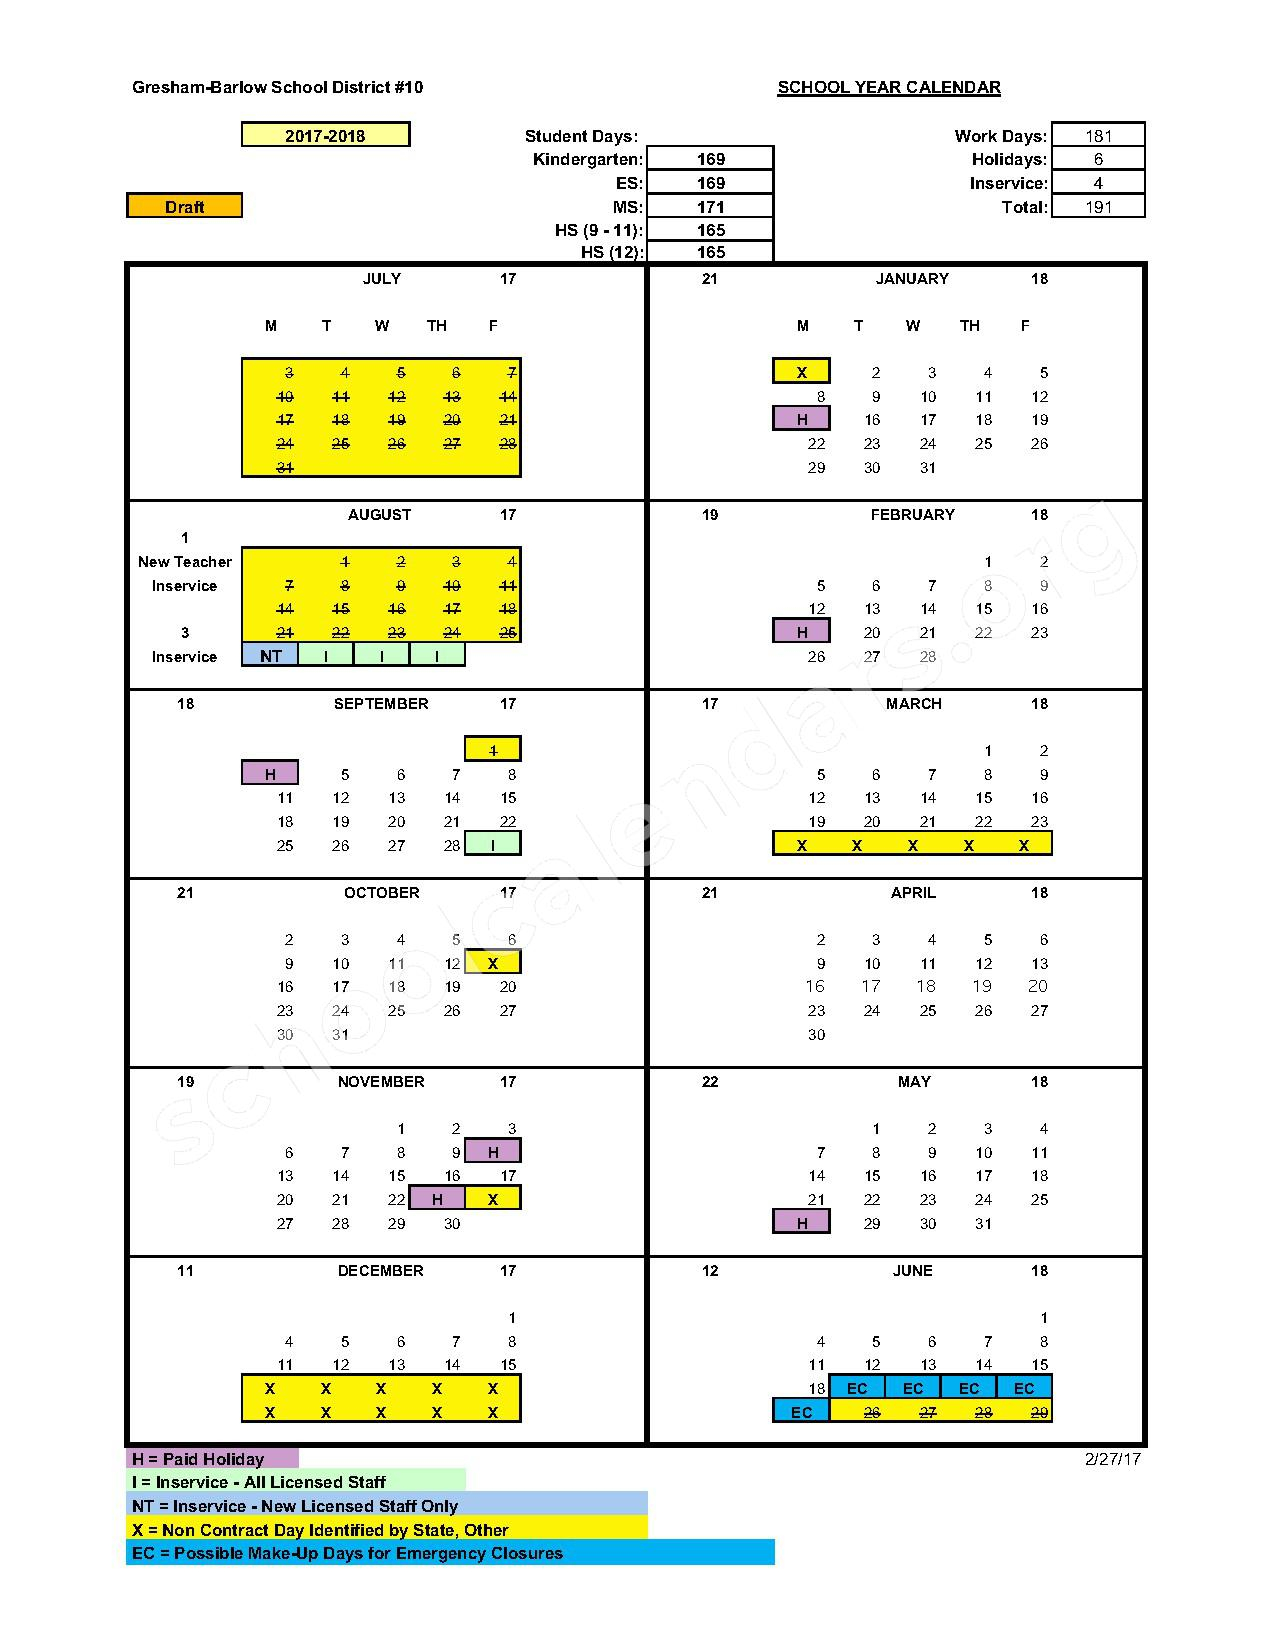 Gresham Barlow School District Calendar 2024 Schoolcalendars net